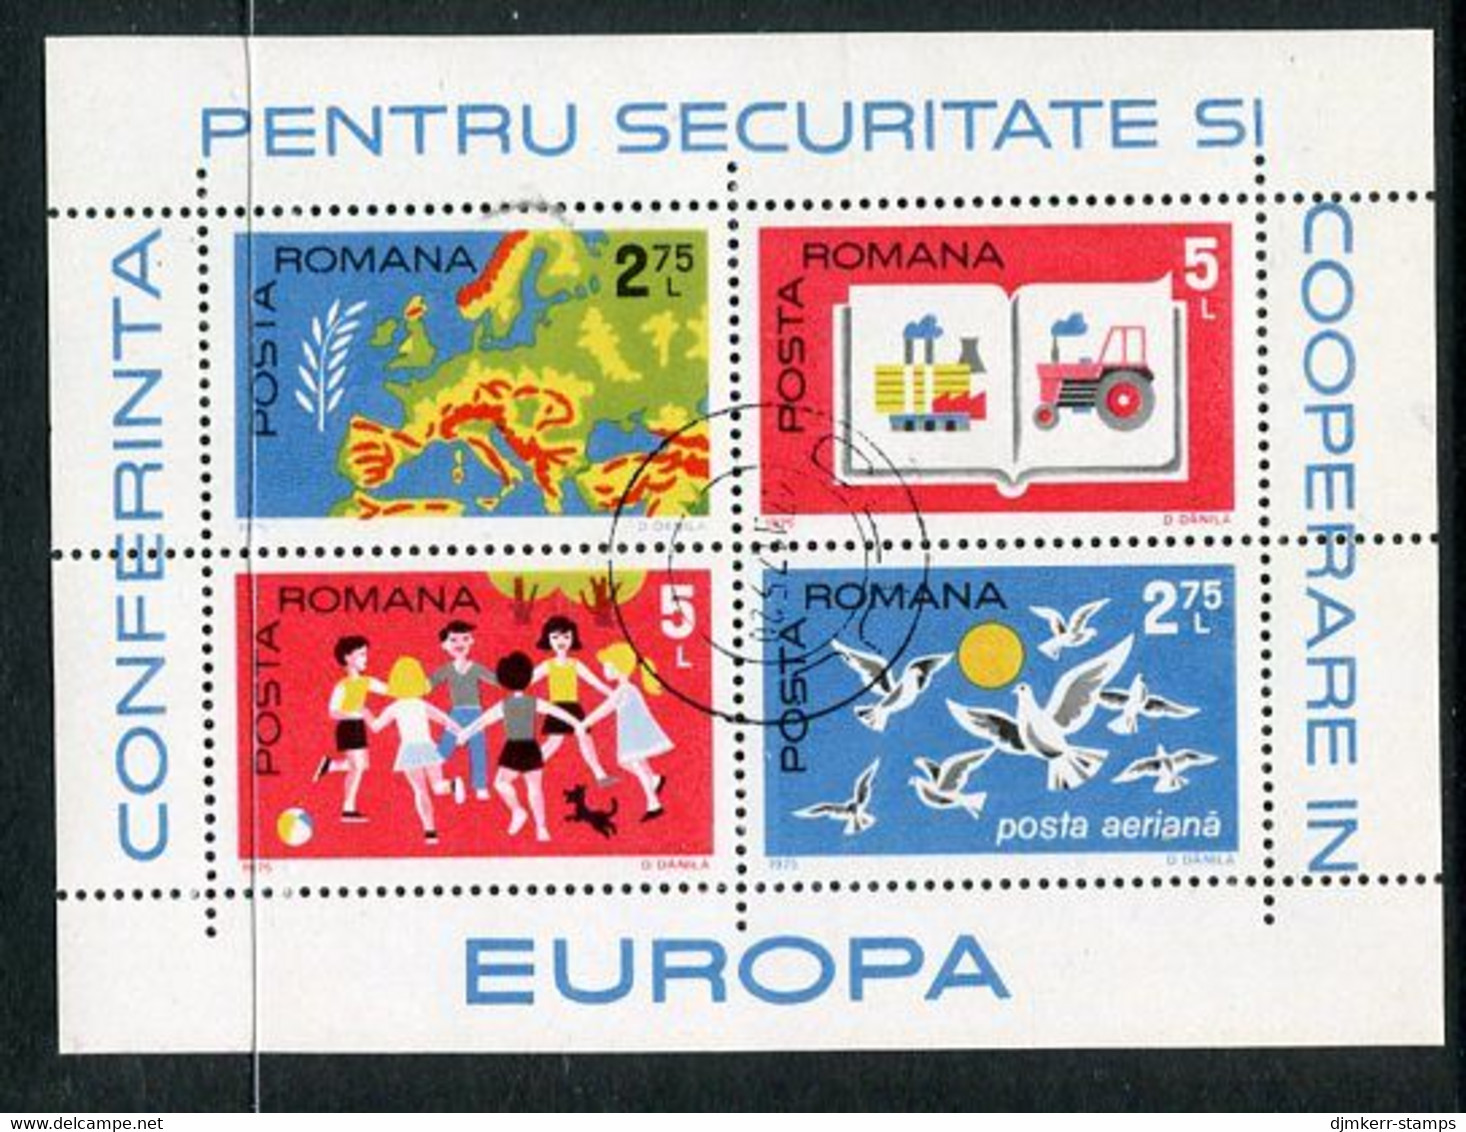 ROMANIA 1975 European Security Conference  Block Used.  Michel Block 124 - Usado